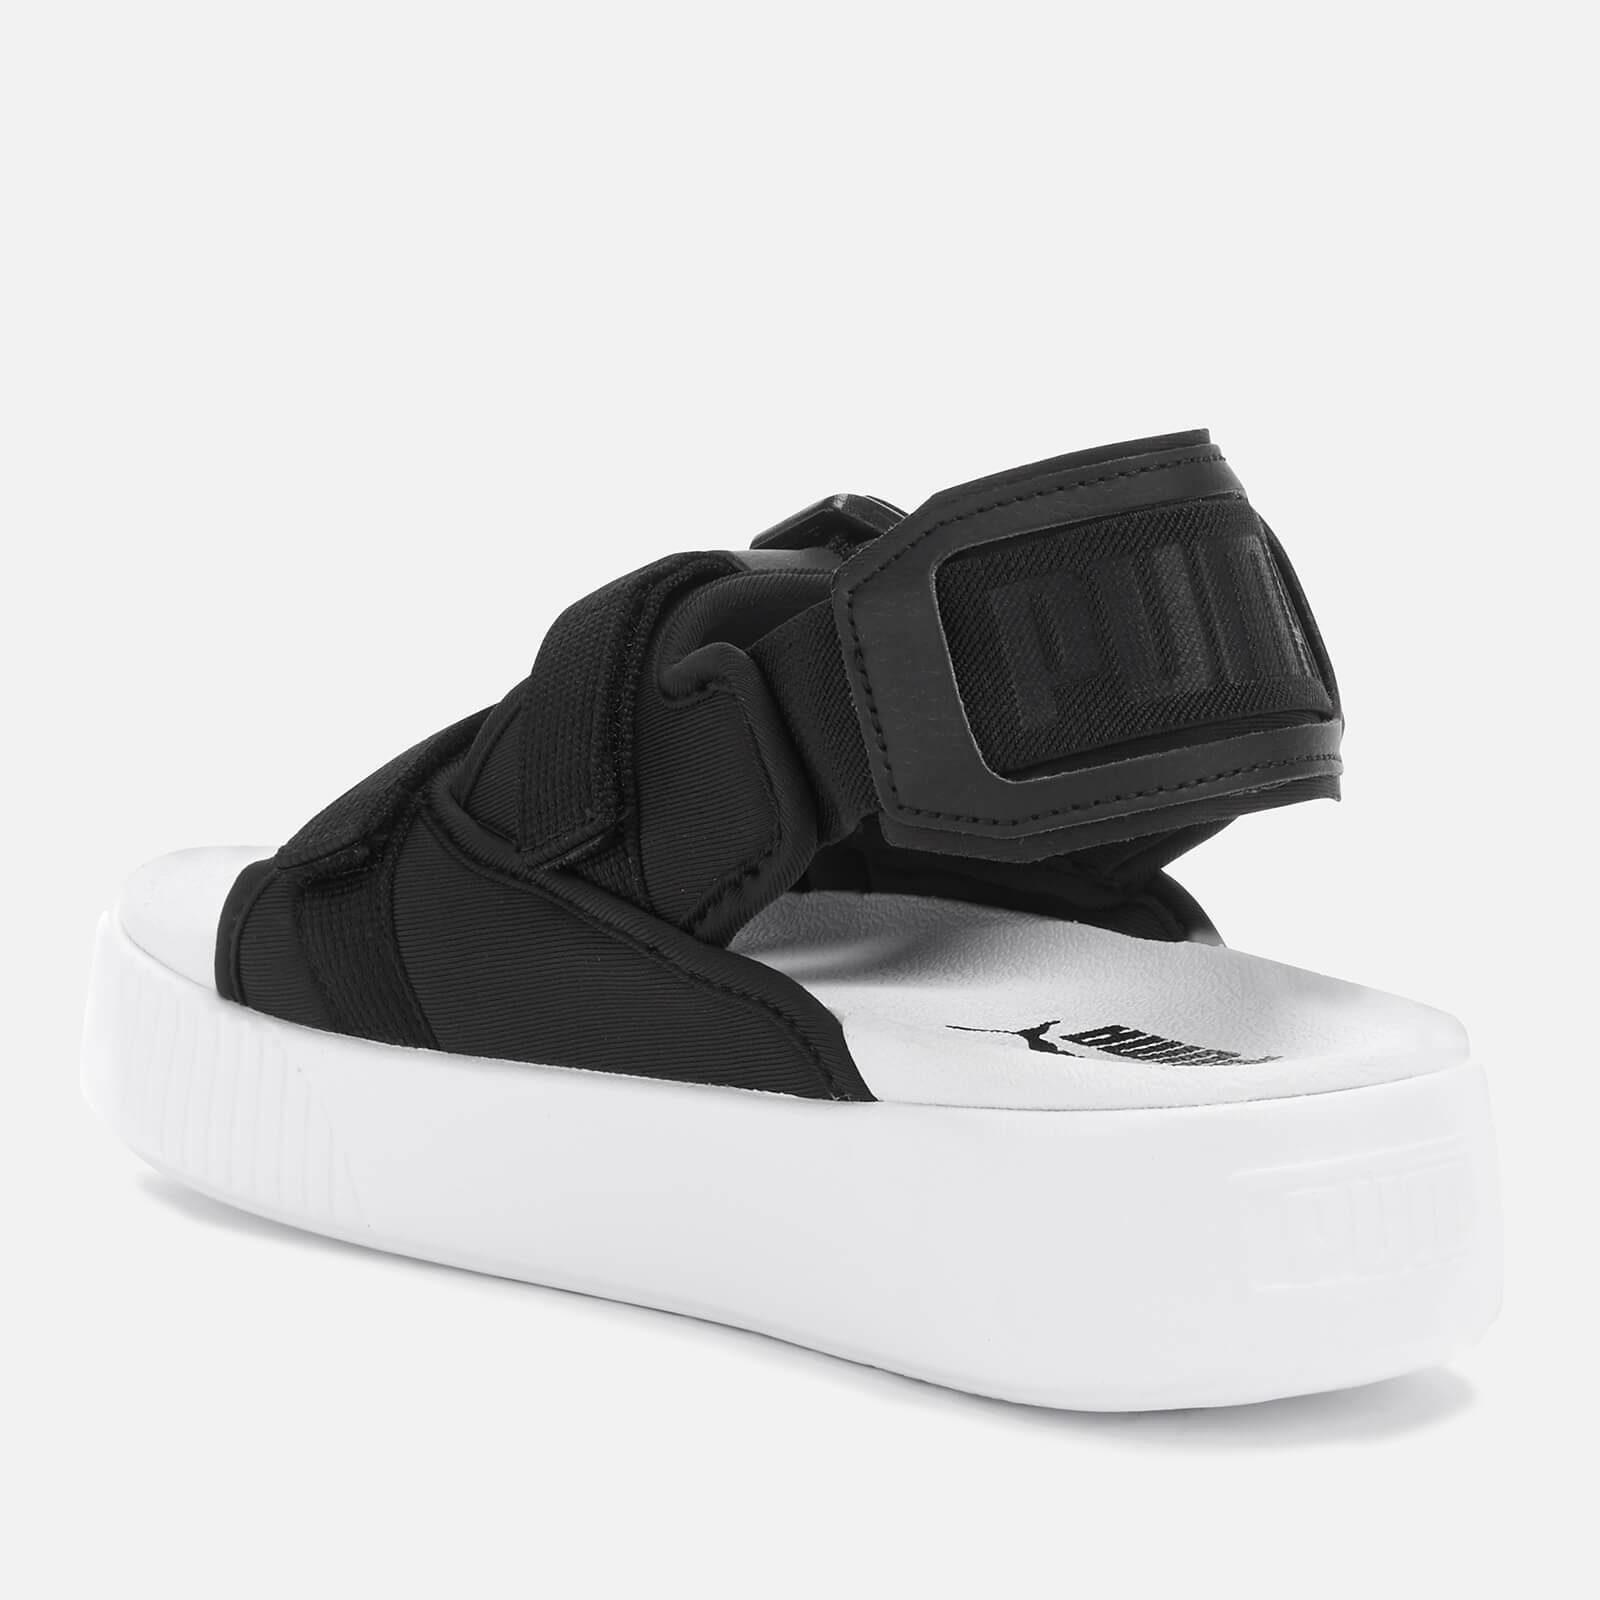 puma women's platform slide ylm sandal